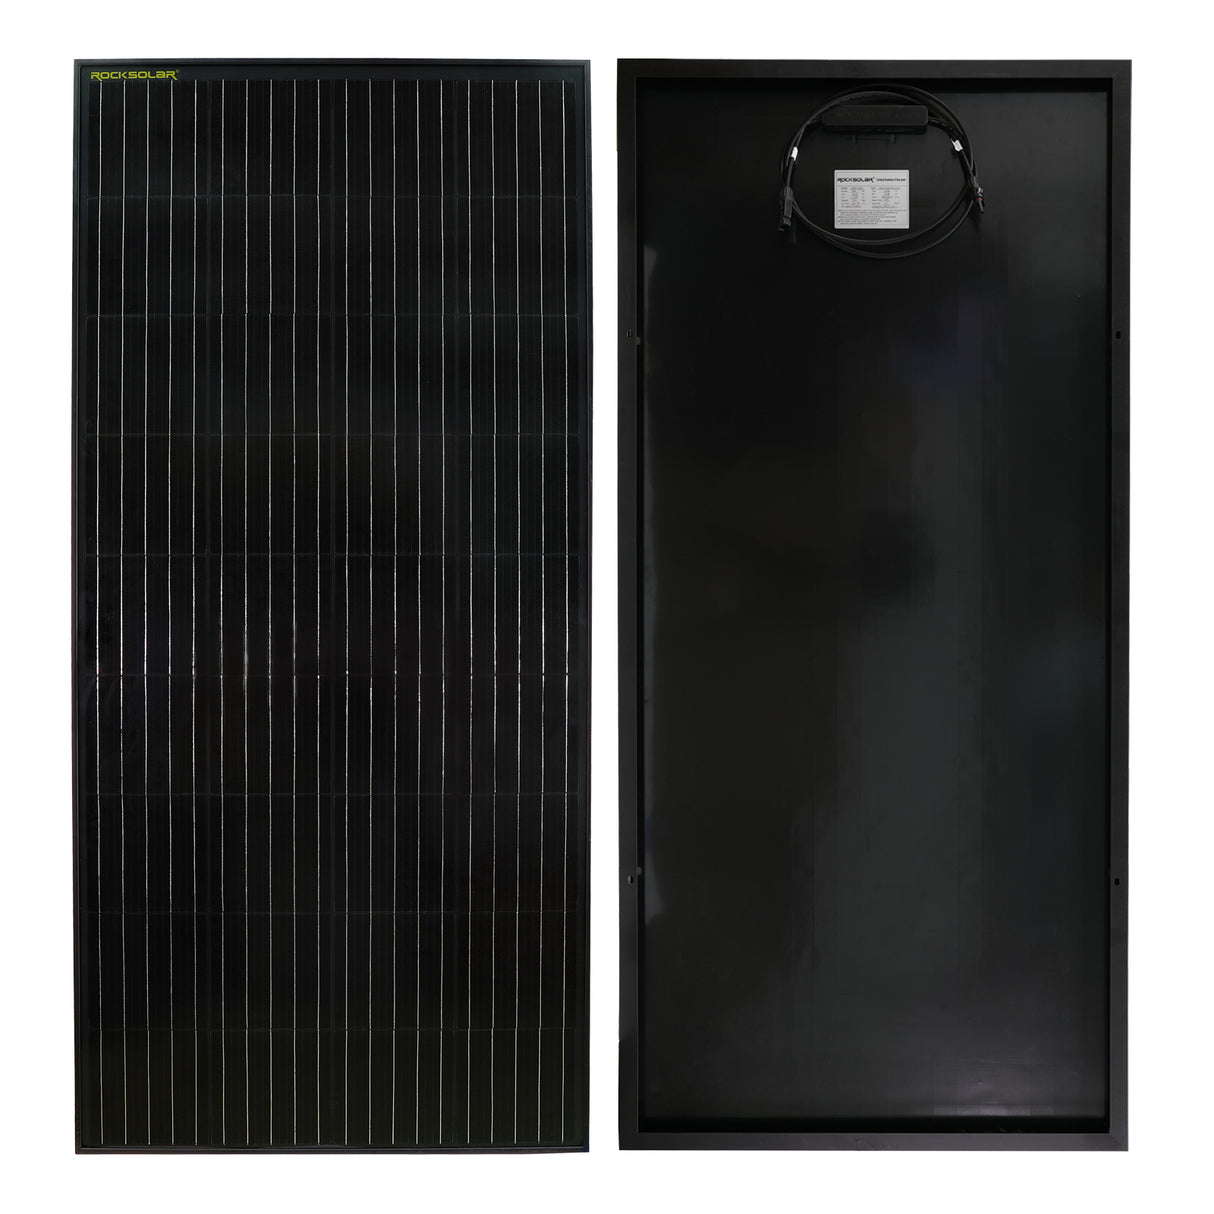 ROCKSOLAR 200W 12V Rigid Monocrystalline Solar Panel